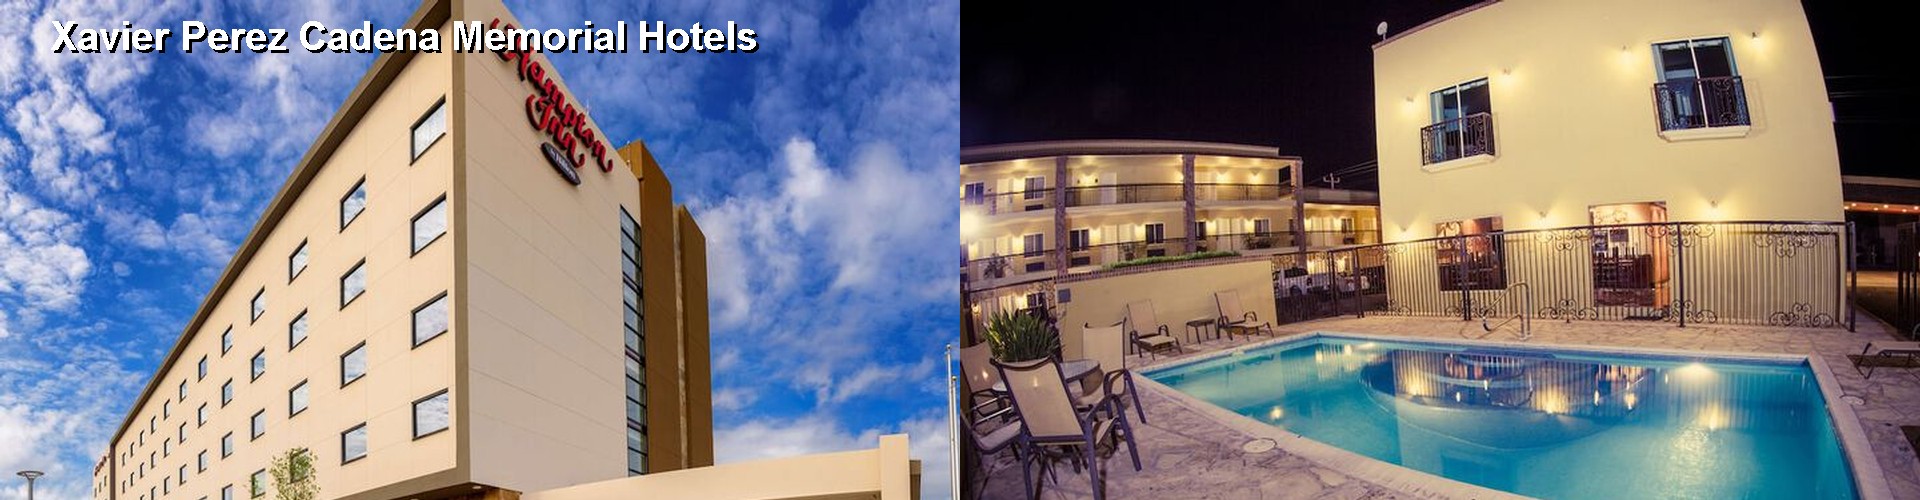 5 Best Hotels near Xavier Perez Cadena Memorial